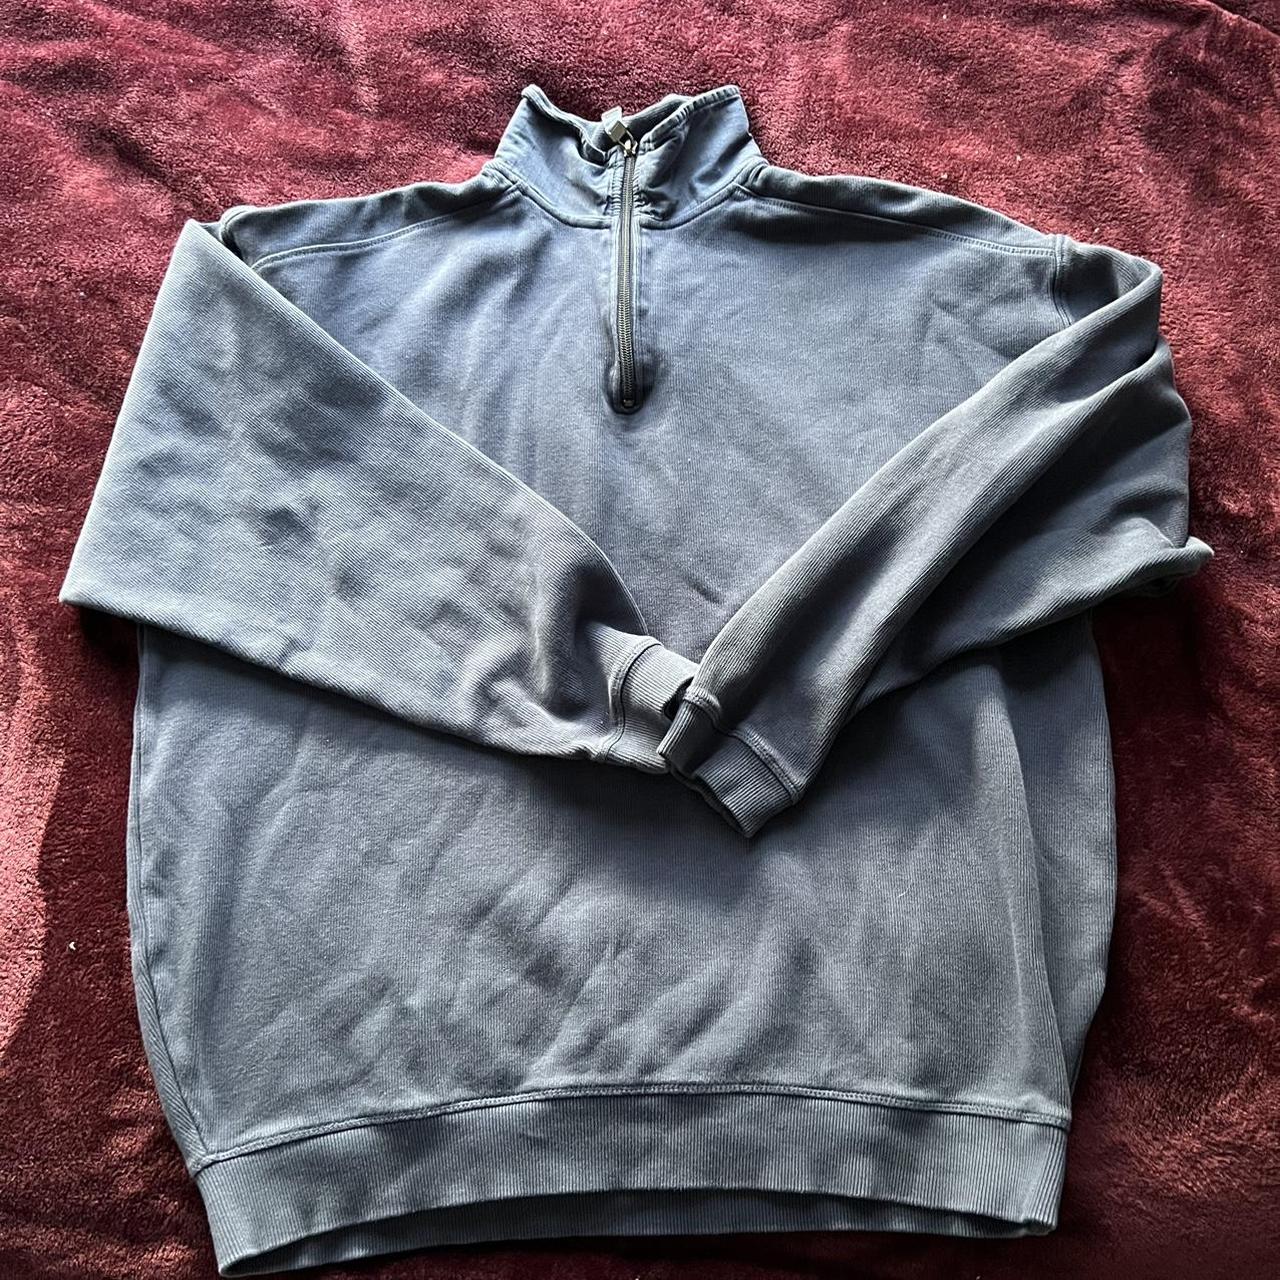 Costco Kirkland sweatshirt super soft only worn once - Depop